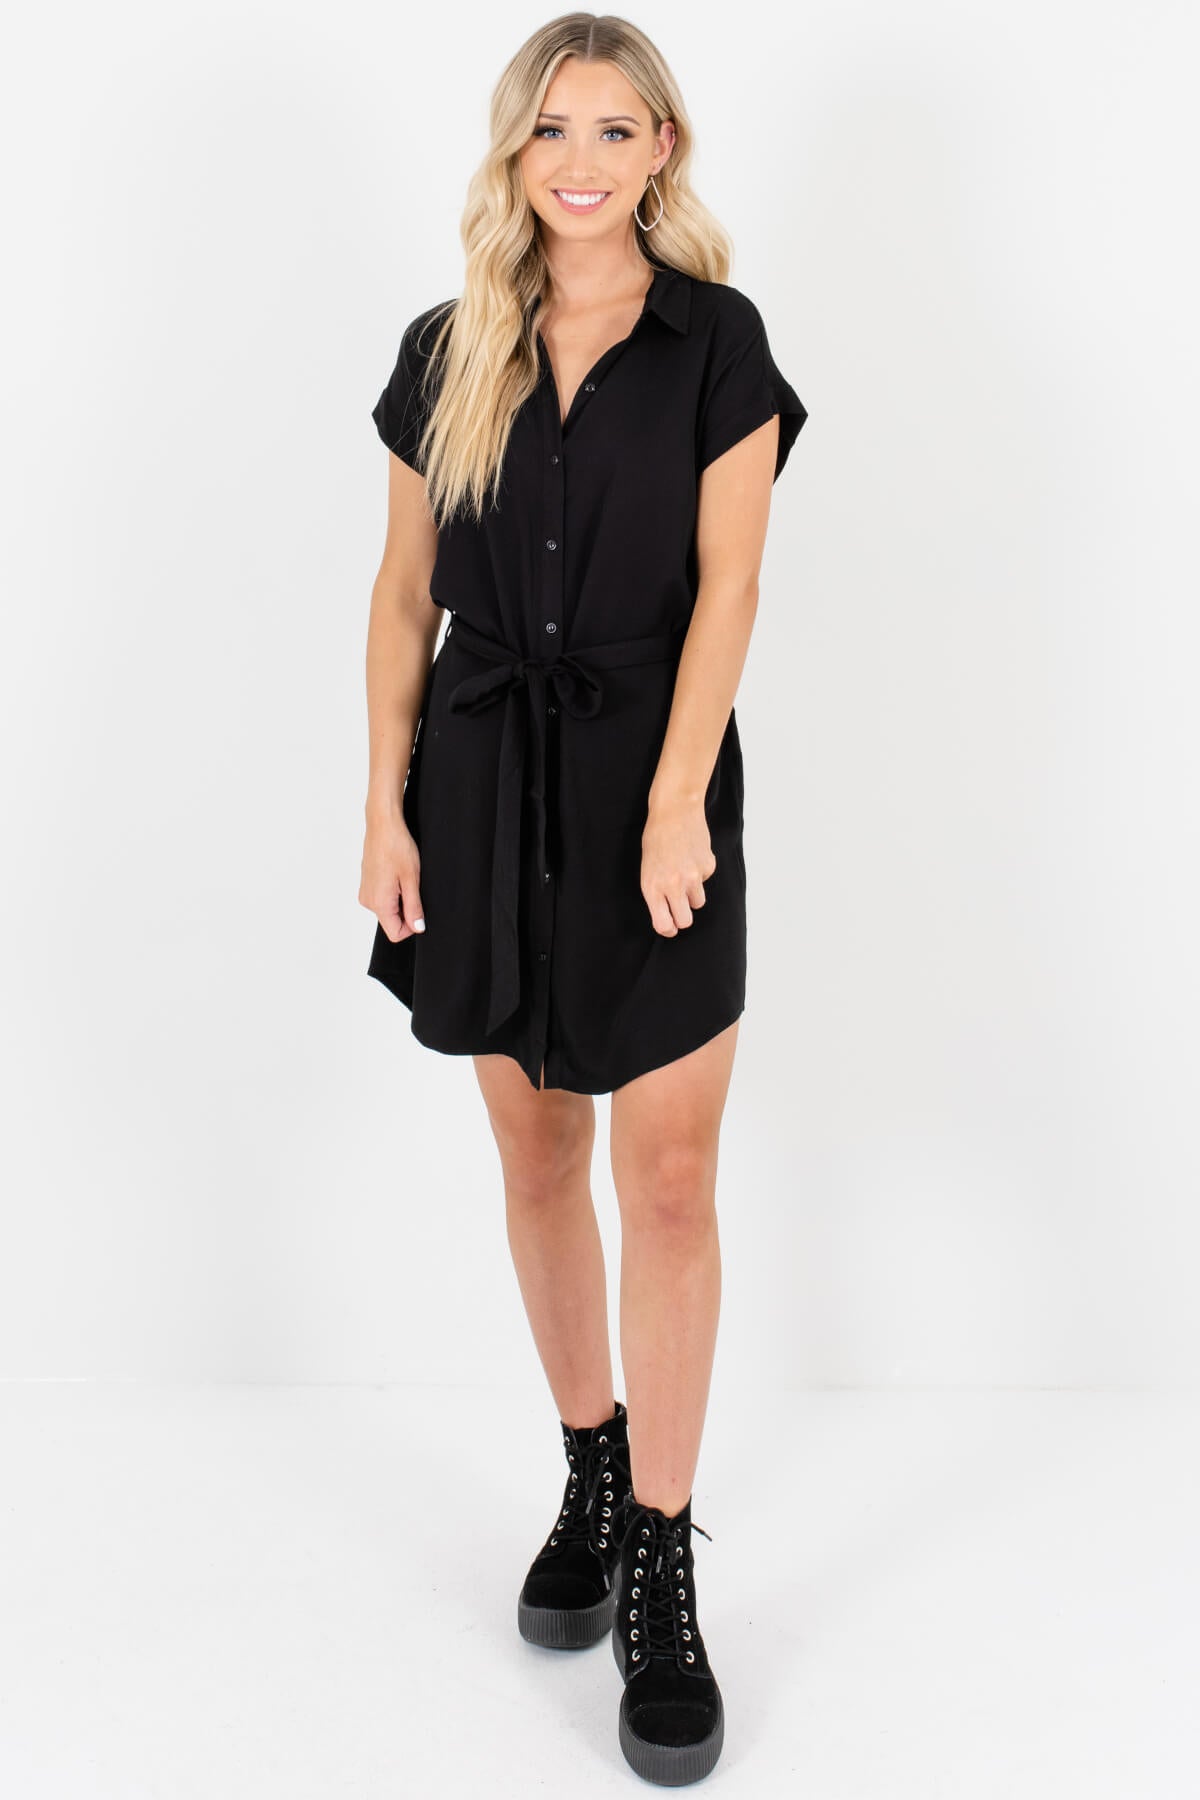 Black Shirt Collar Button Up Mini Dresses Affordable Boutique